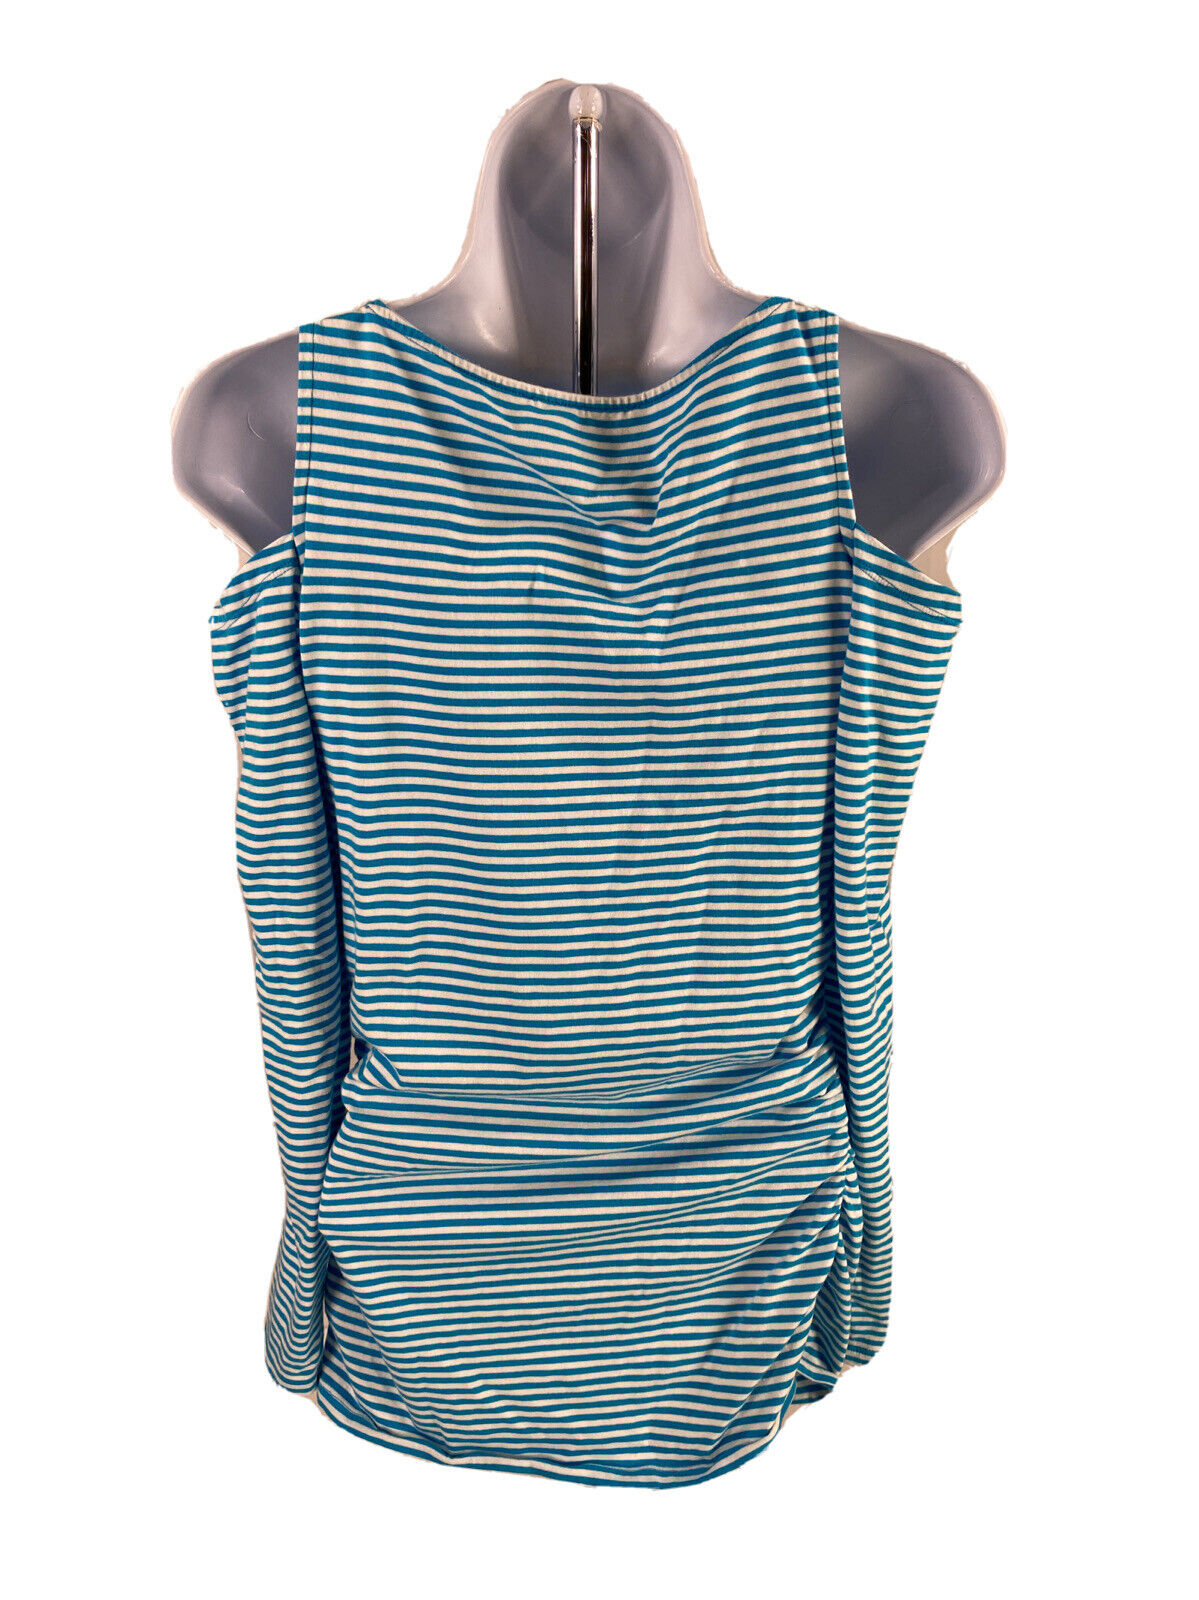 Michael Kors Camisa con cremallera lateral y hombros descubiertos a rayas azul/blanco para mujer - S